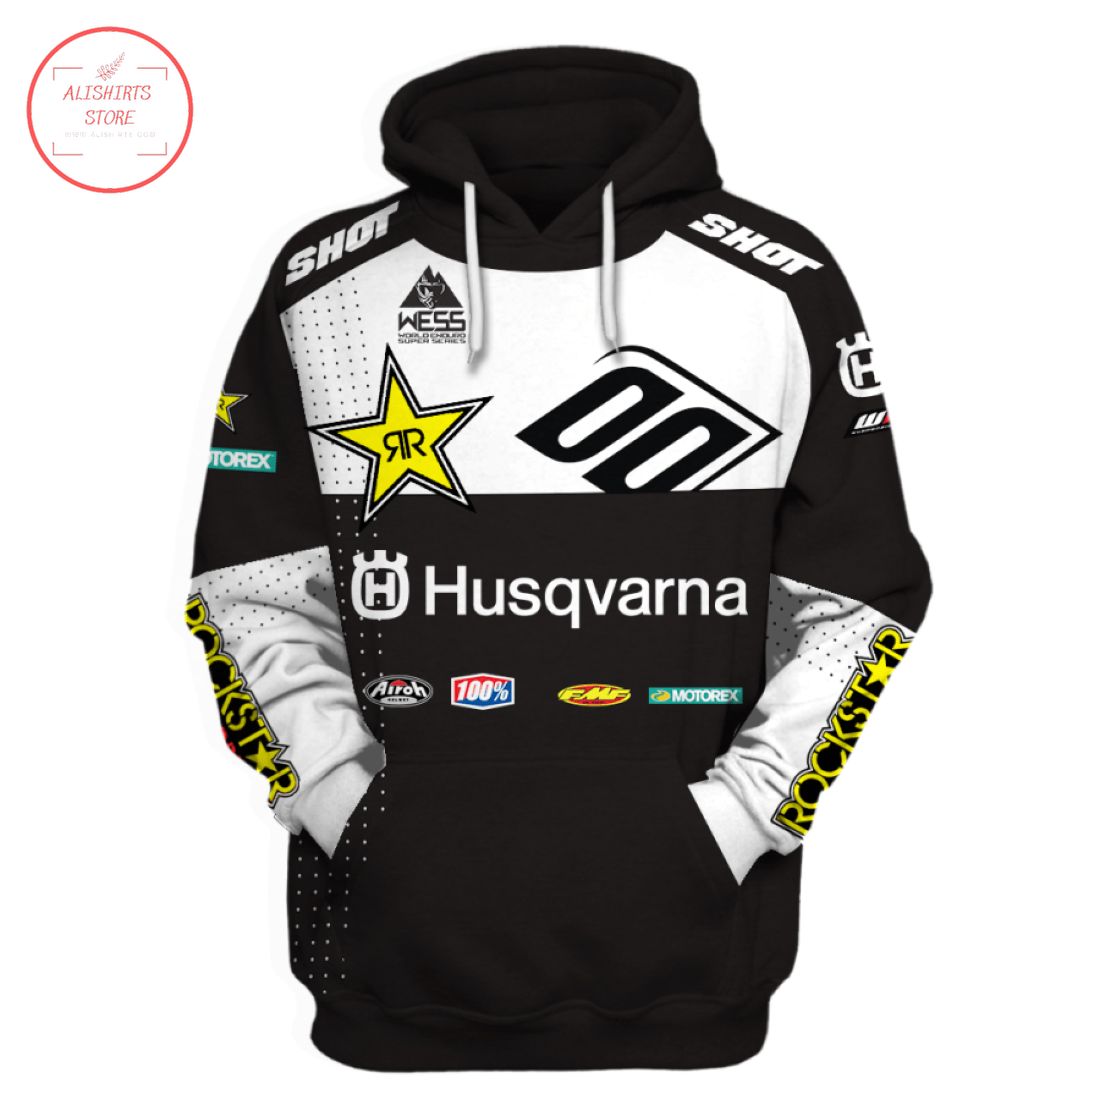 Husqvarna Rockstar Energy Drink Personalized 3d Shirts